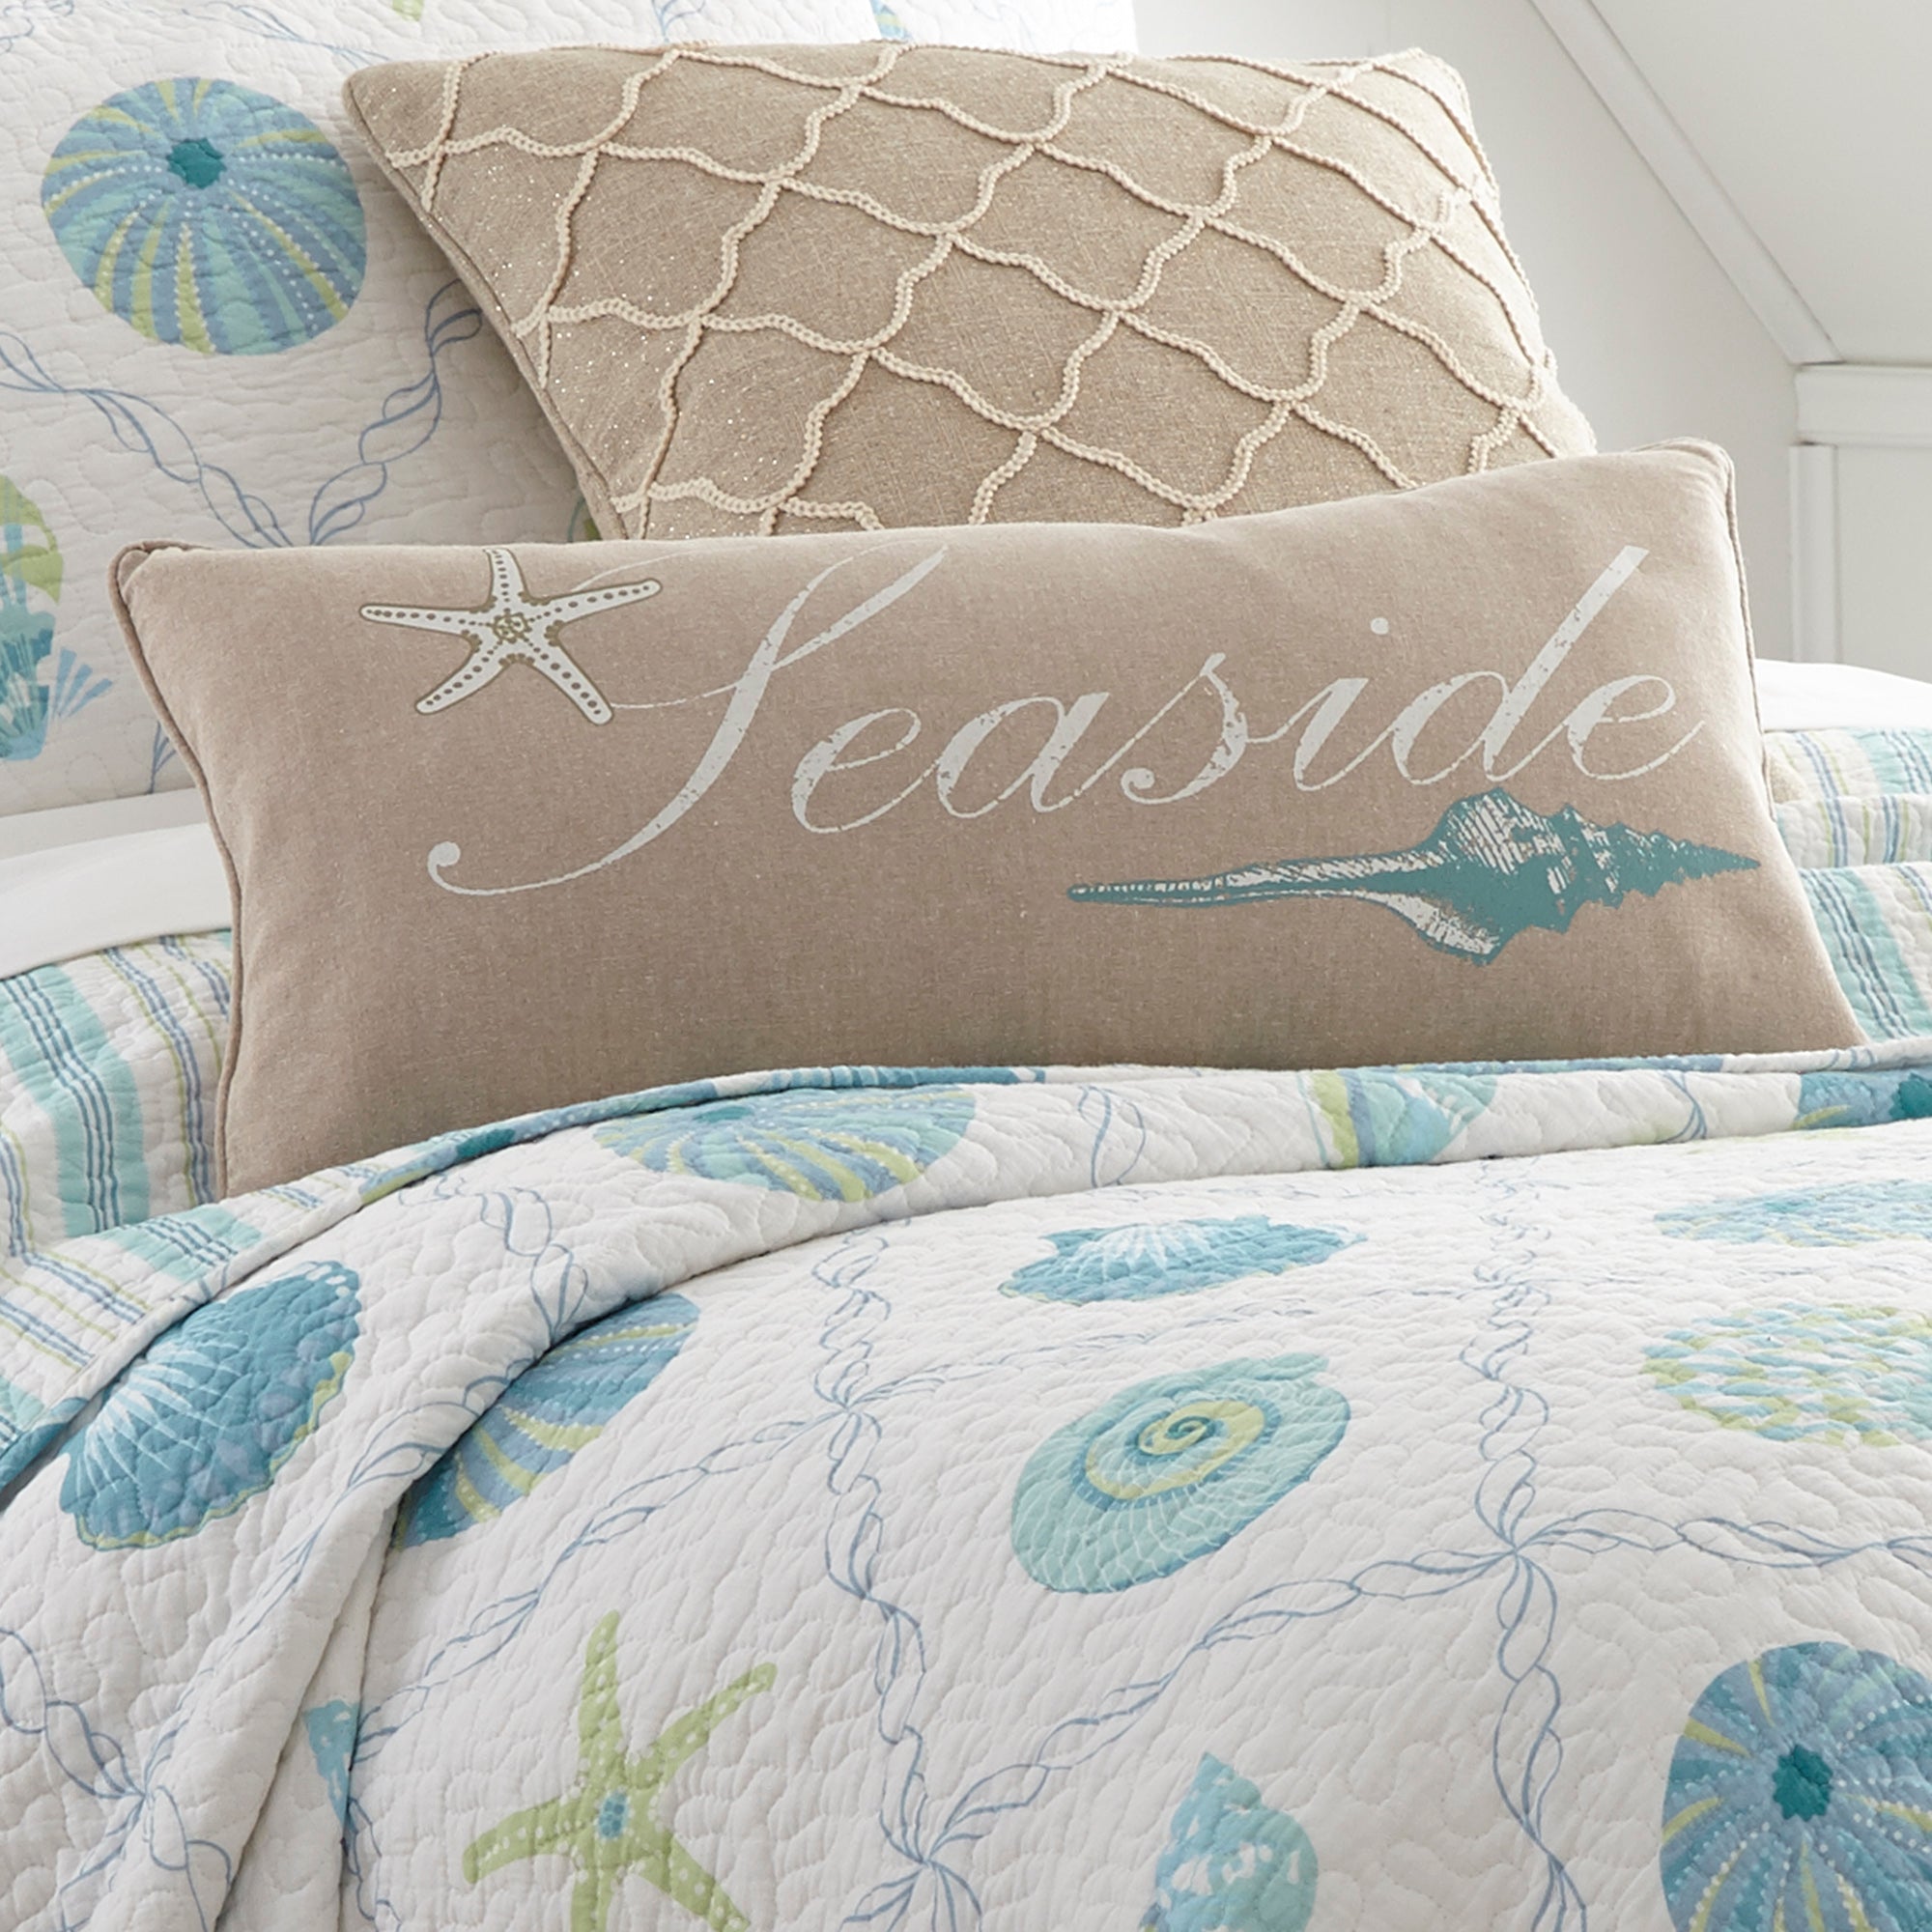 Marine Dream Seaglass seaside 12x24 Pillow